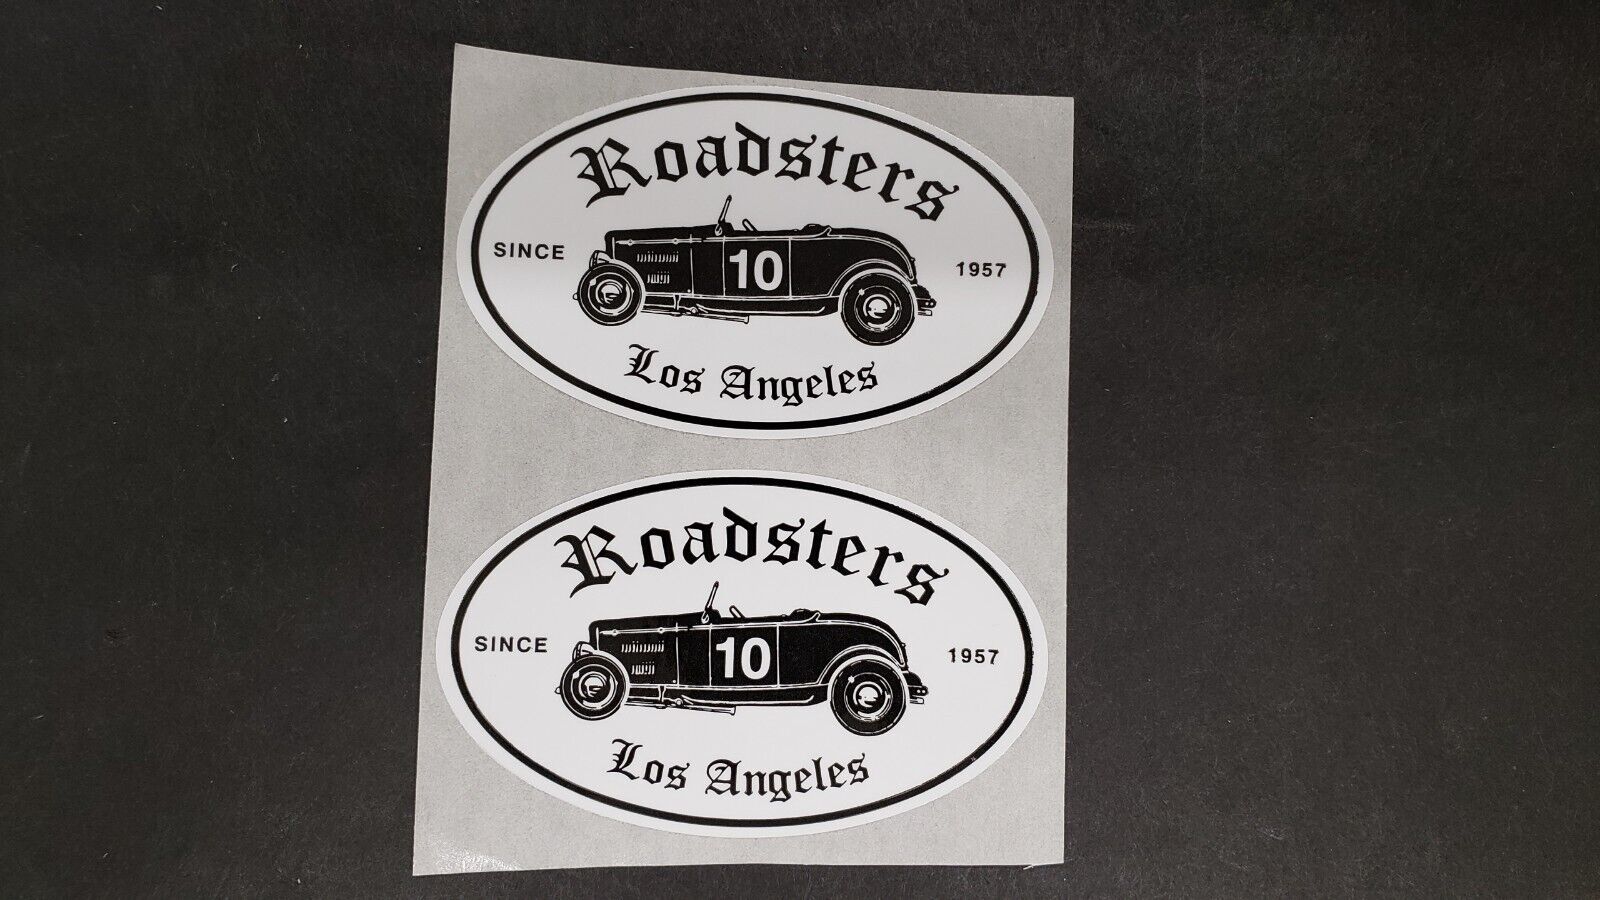 TWO L.A. ROADSTERS ROADSTER SINCE 1957 #10 BLACK CAR STICKERS STICKER